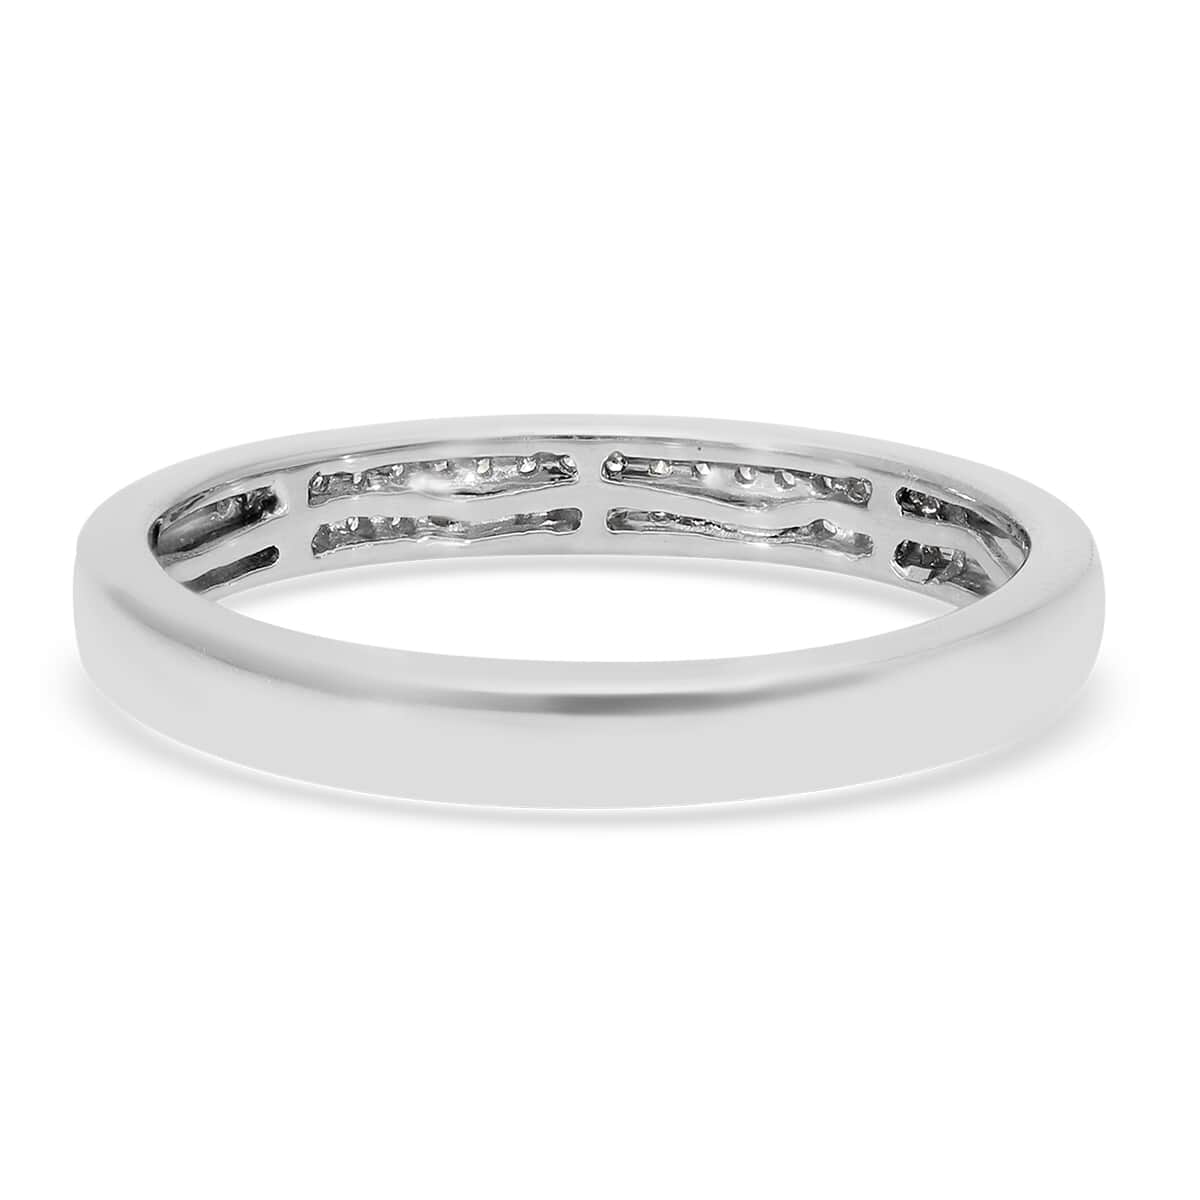 RHAPSODY IGI Certified 950 Platinum Diamond (E-F, VS) Ring (Size 9.0) (5 g) 0.18 ctw image number 4